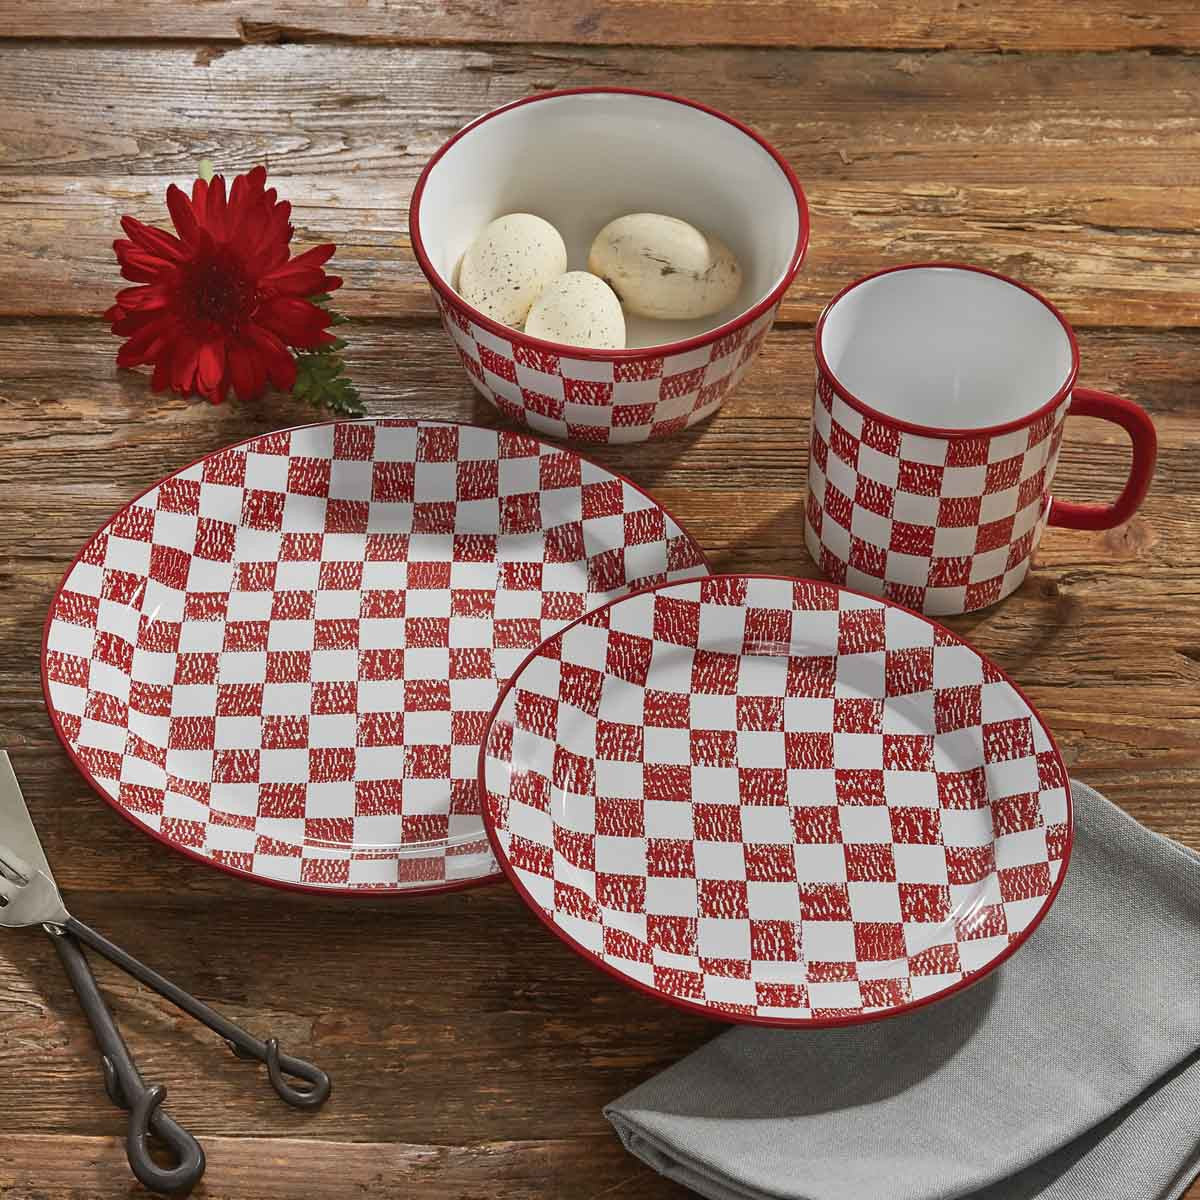 Chicken Coop Dinner Plate - Check Set of 4 Park Designs